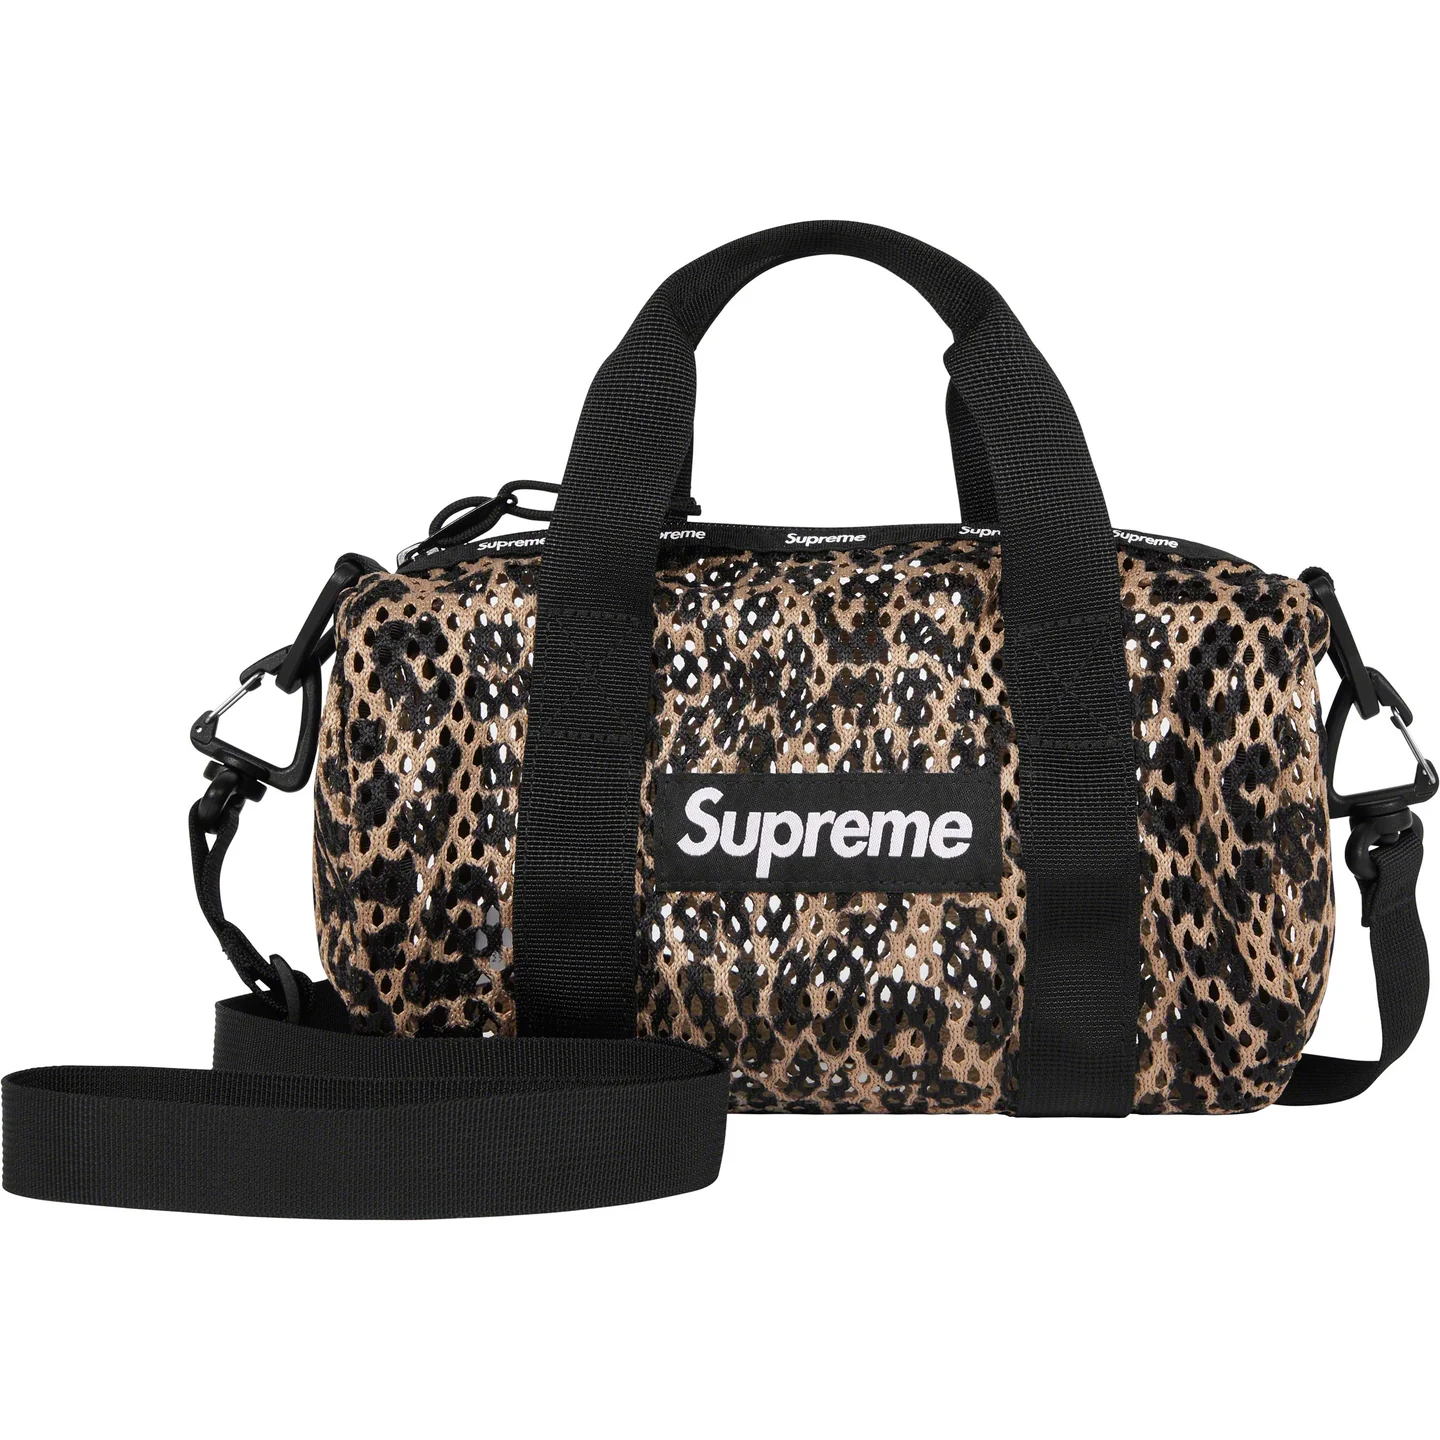 Supreme Mesh Mini Duffle Bag